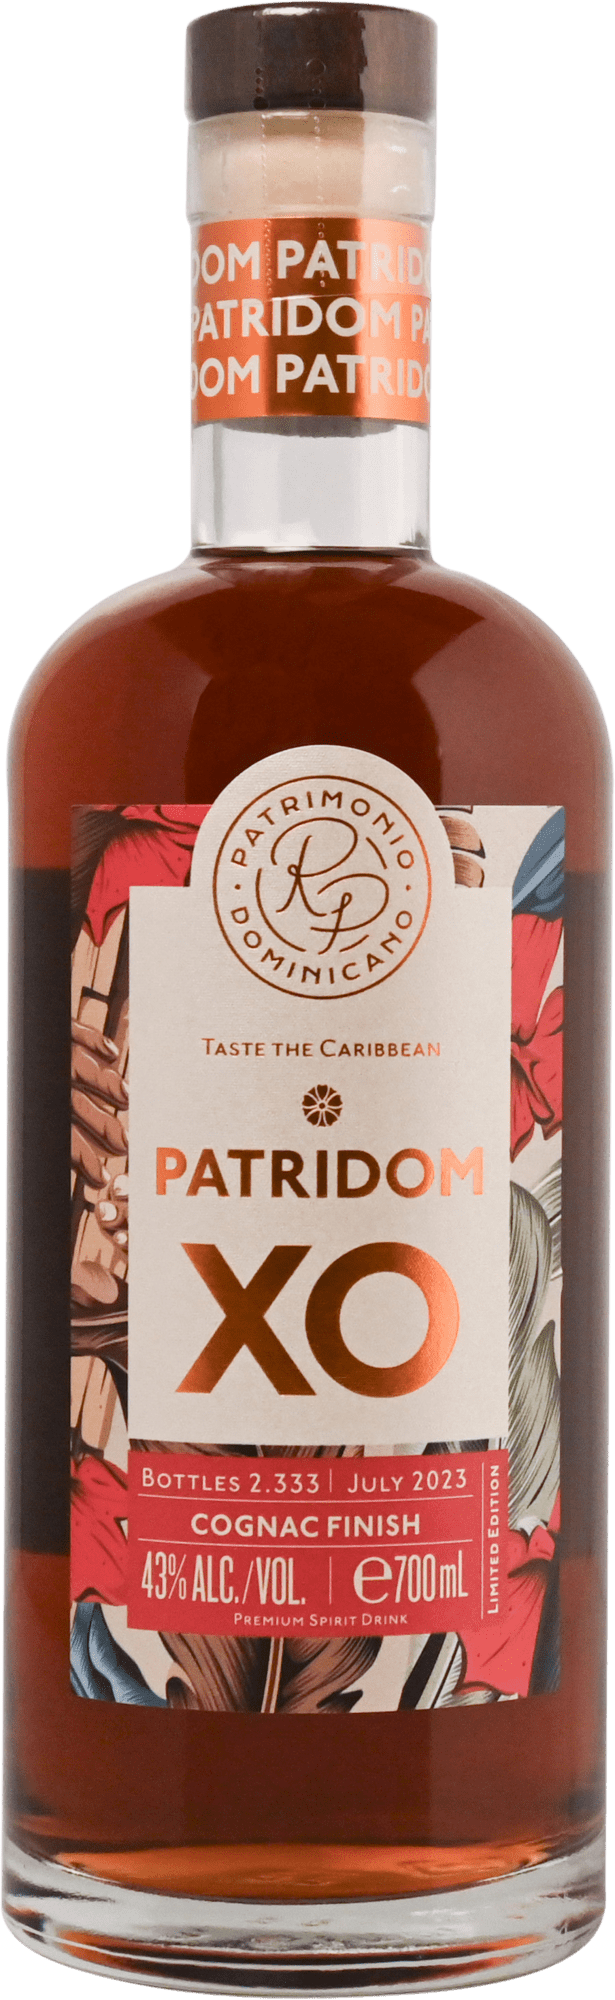 E-shop Patridom XO Cognac Finish, GIFT